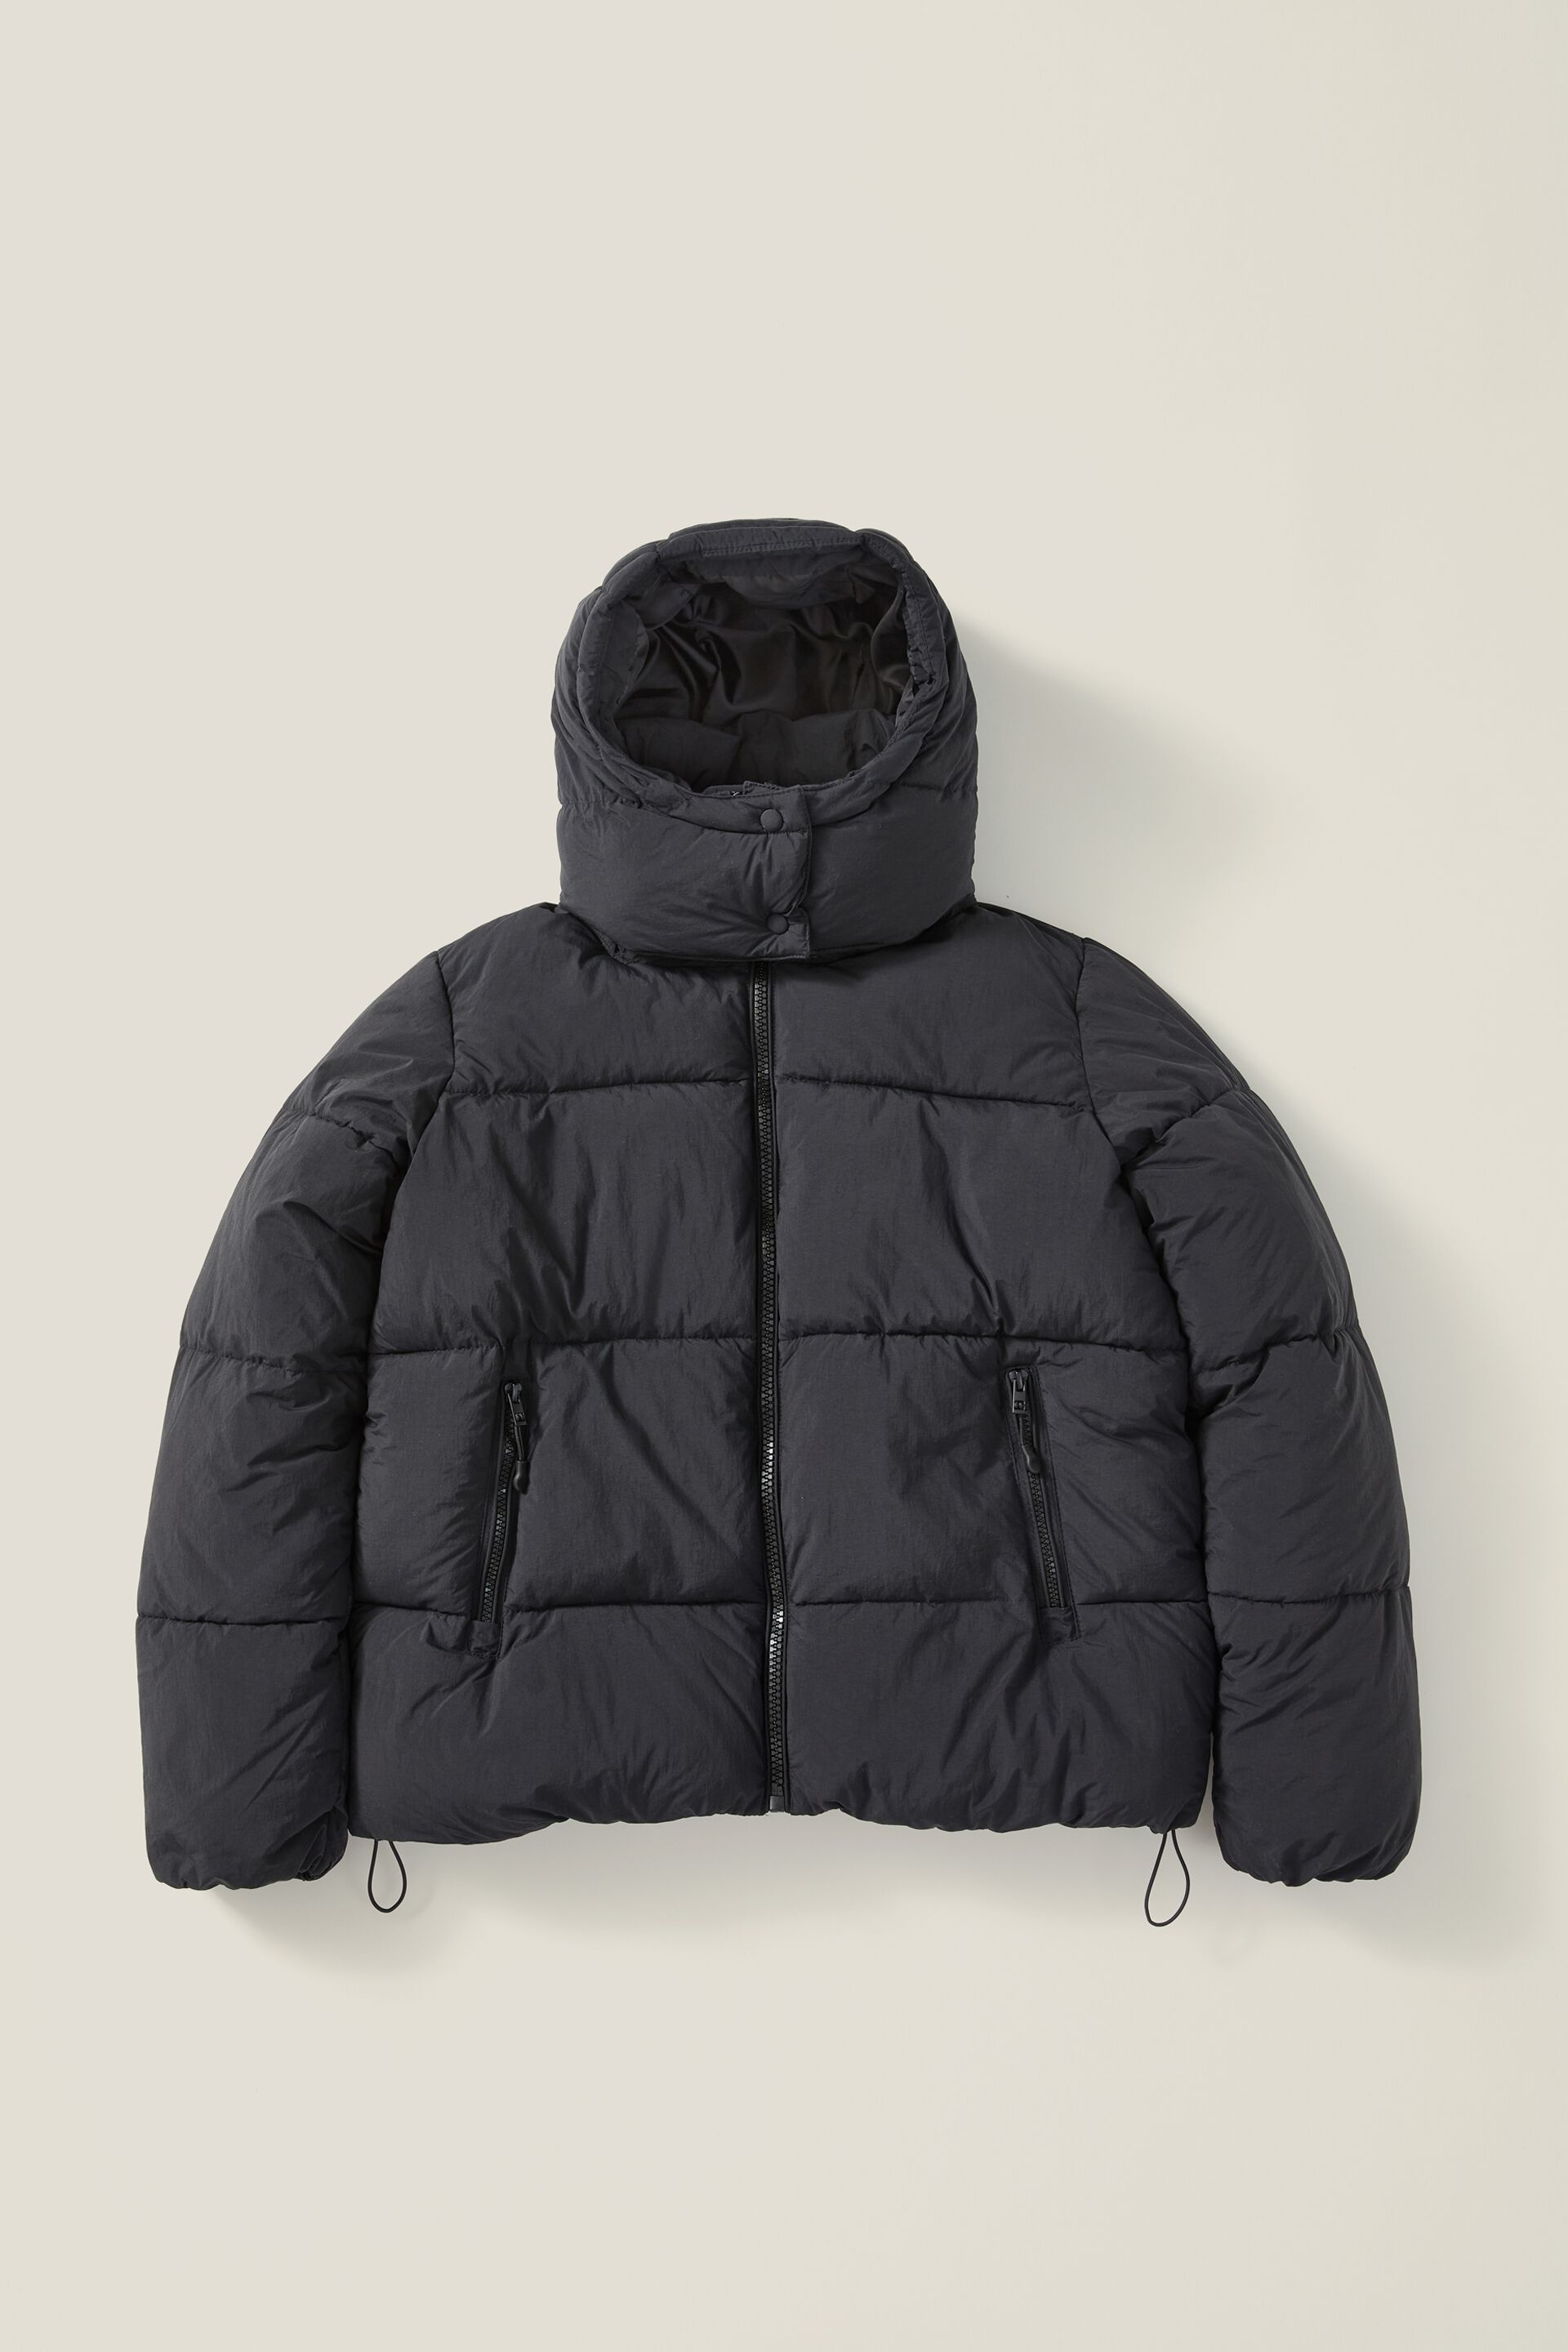 Mens Black Puffer Jacket Zipped Pockets Hooded Winter Coat – Voi London